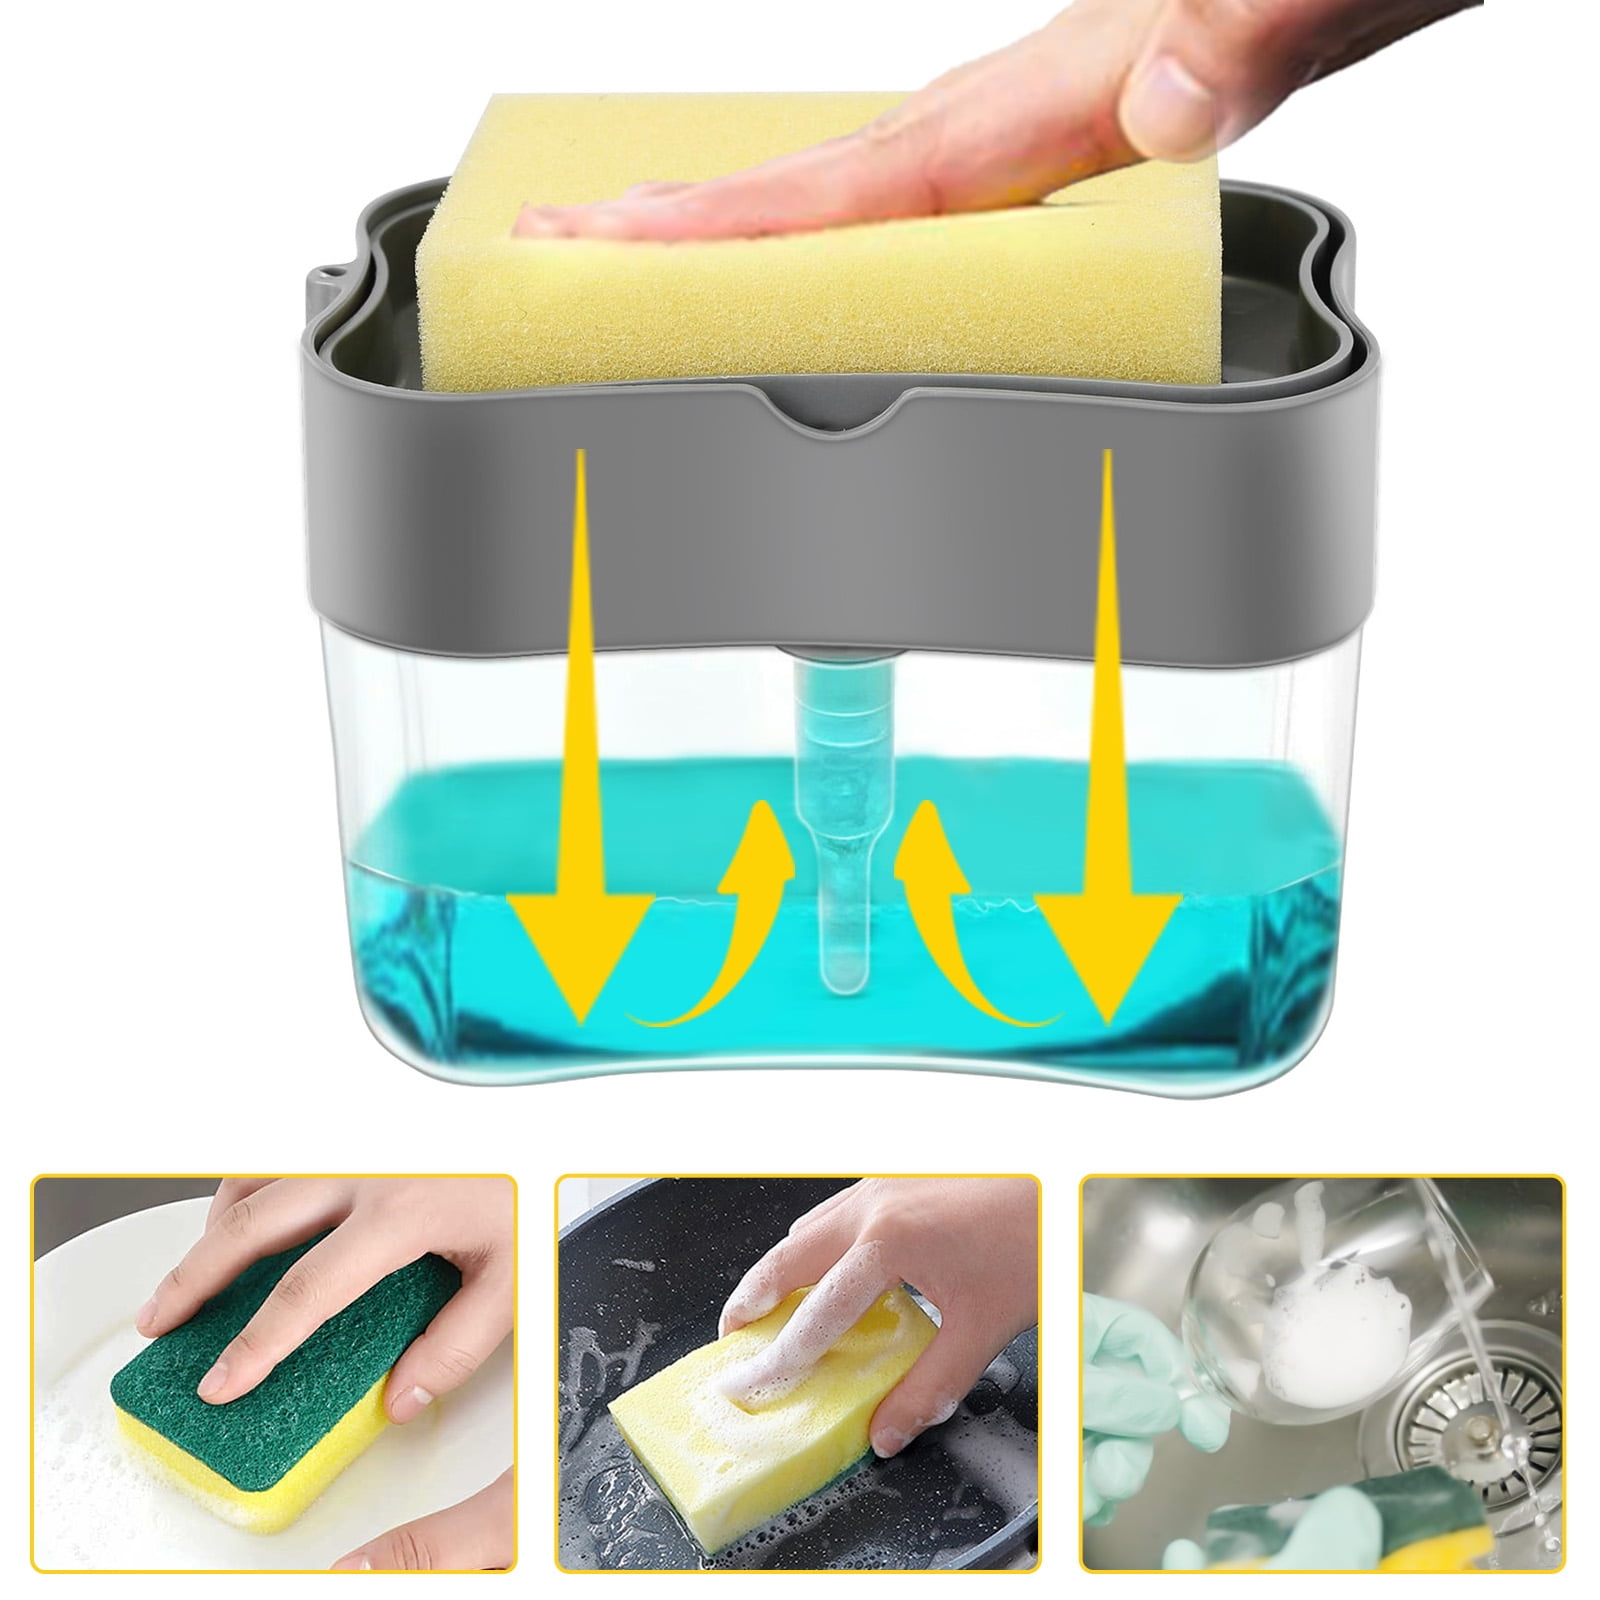 Details about   Kitchen Manual Soap Dispenser Sponge Holder Dishcleaning Soap Pump Caddy Box 